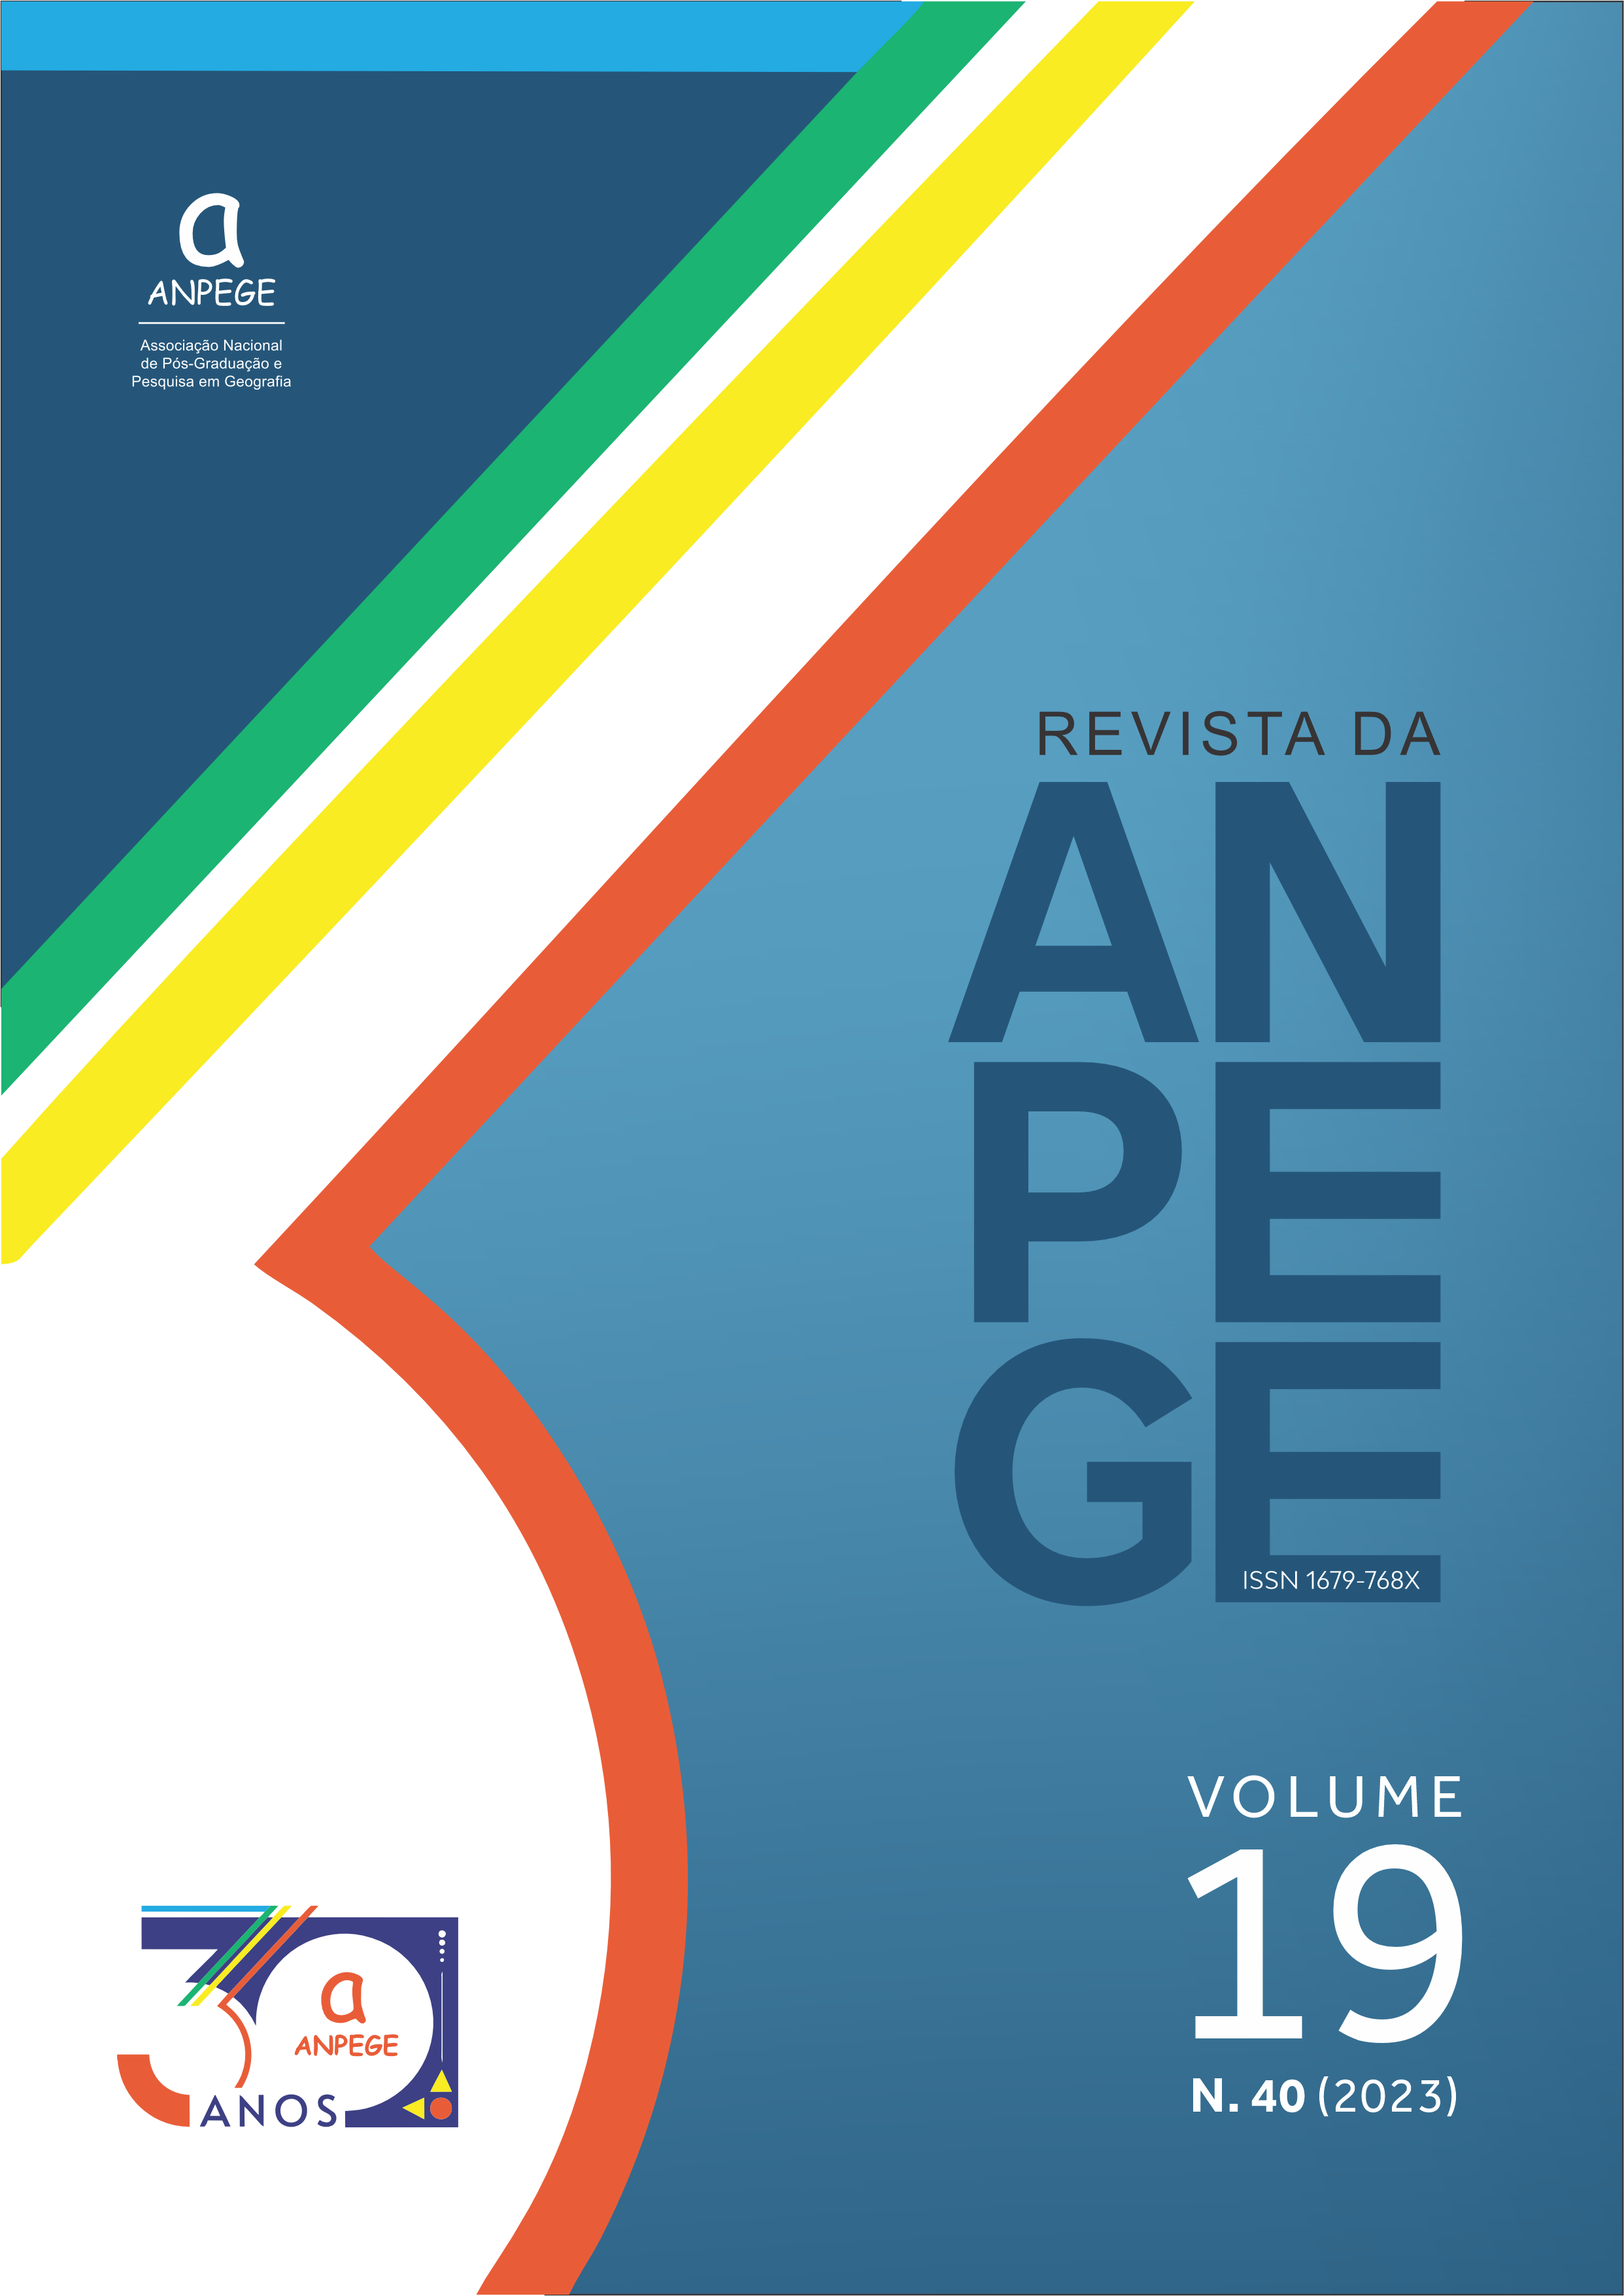 					Visualizar v. 19 n. 40 (2023): Revista da ANPEGE, Volume 19 Número 40
				